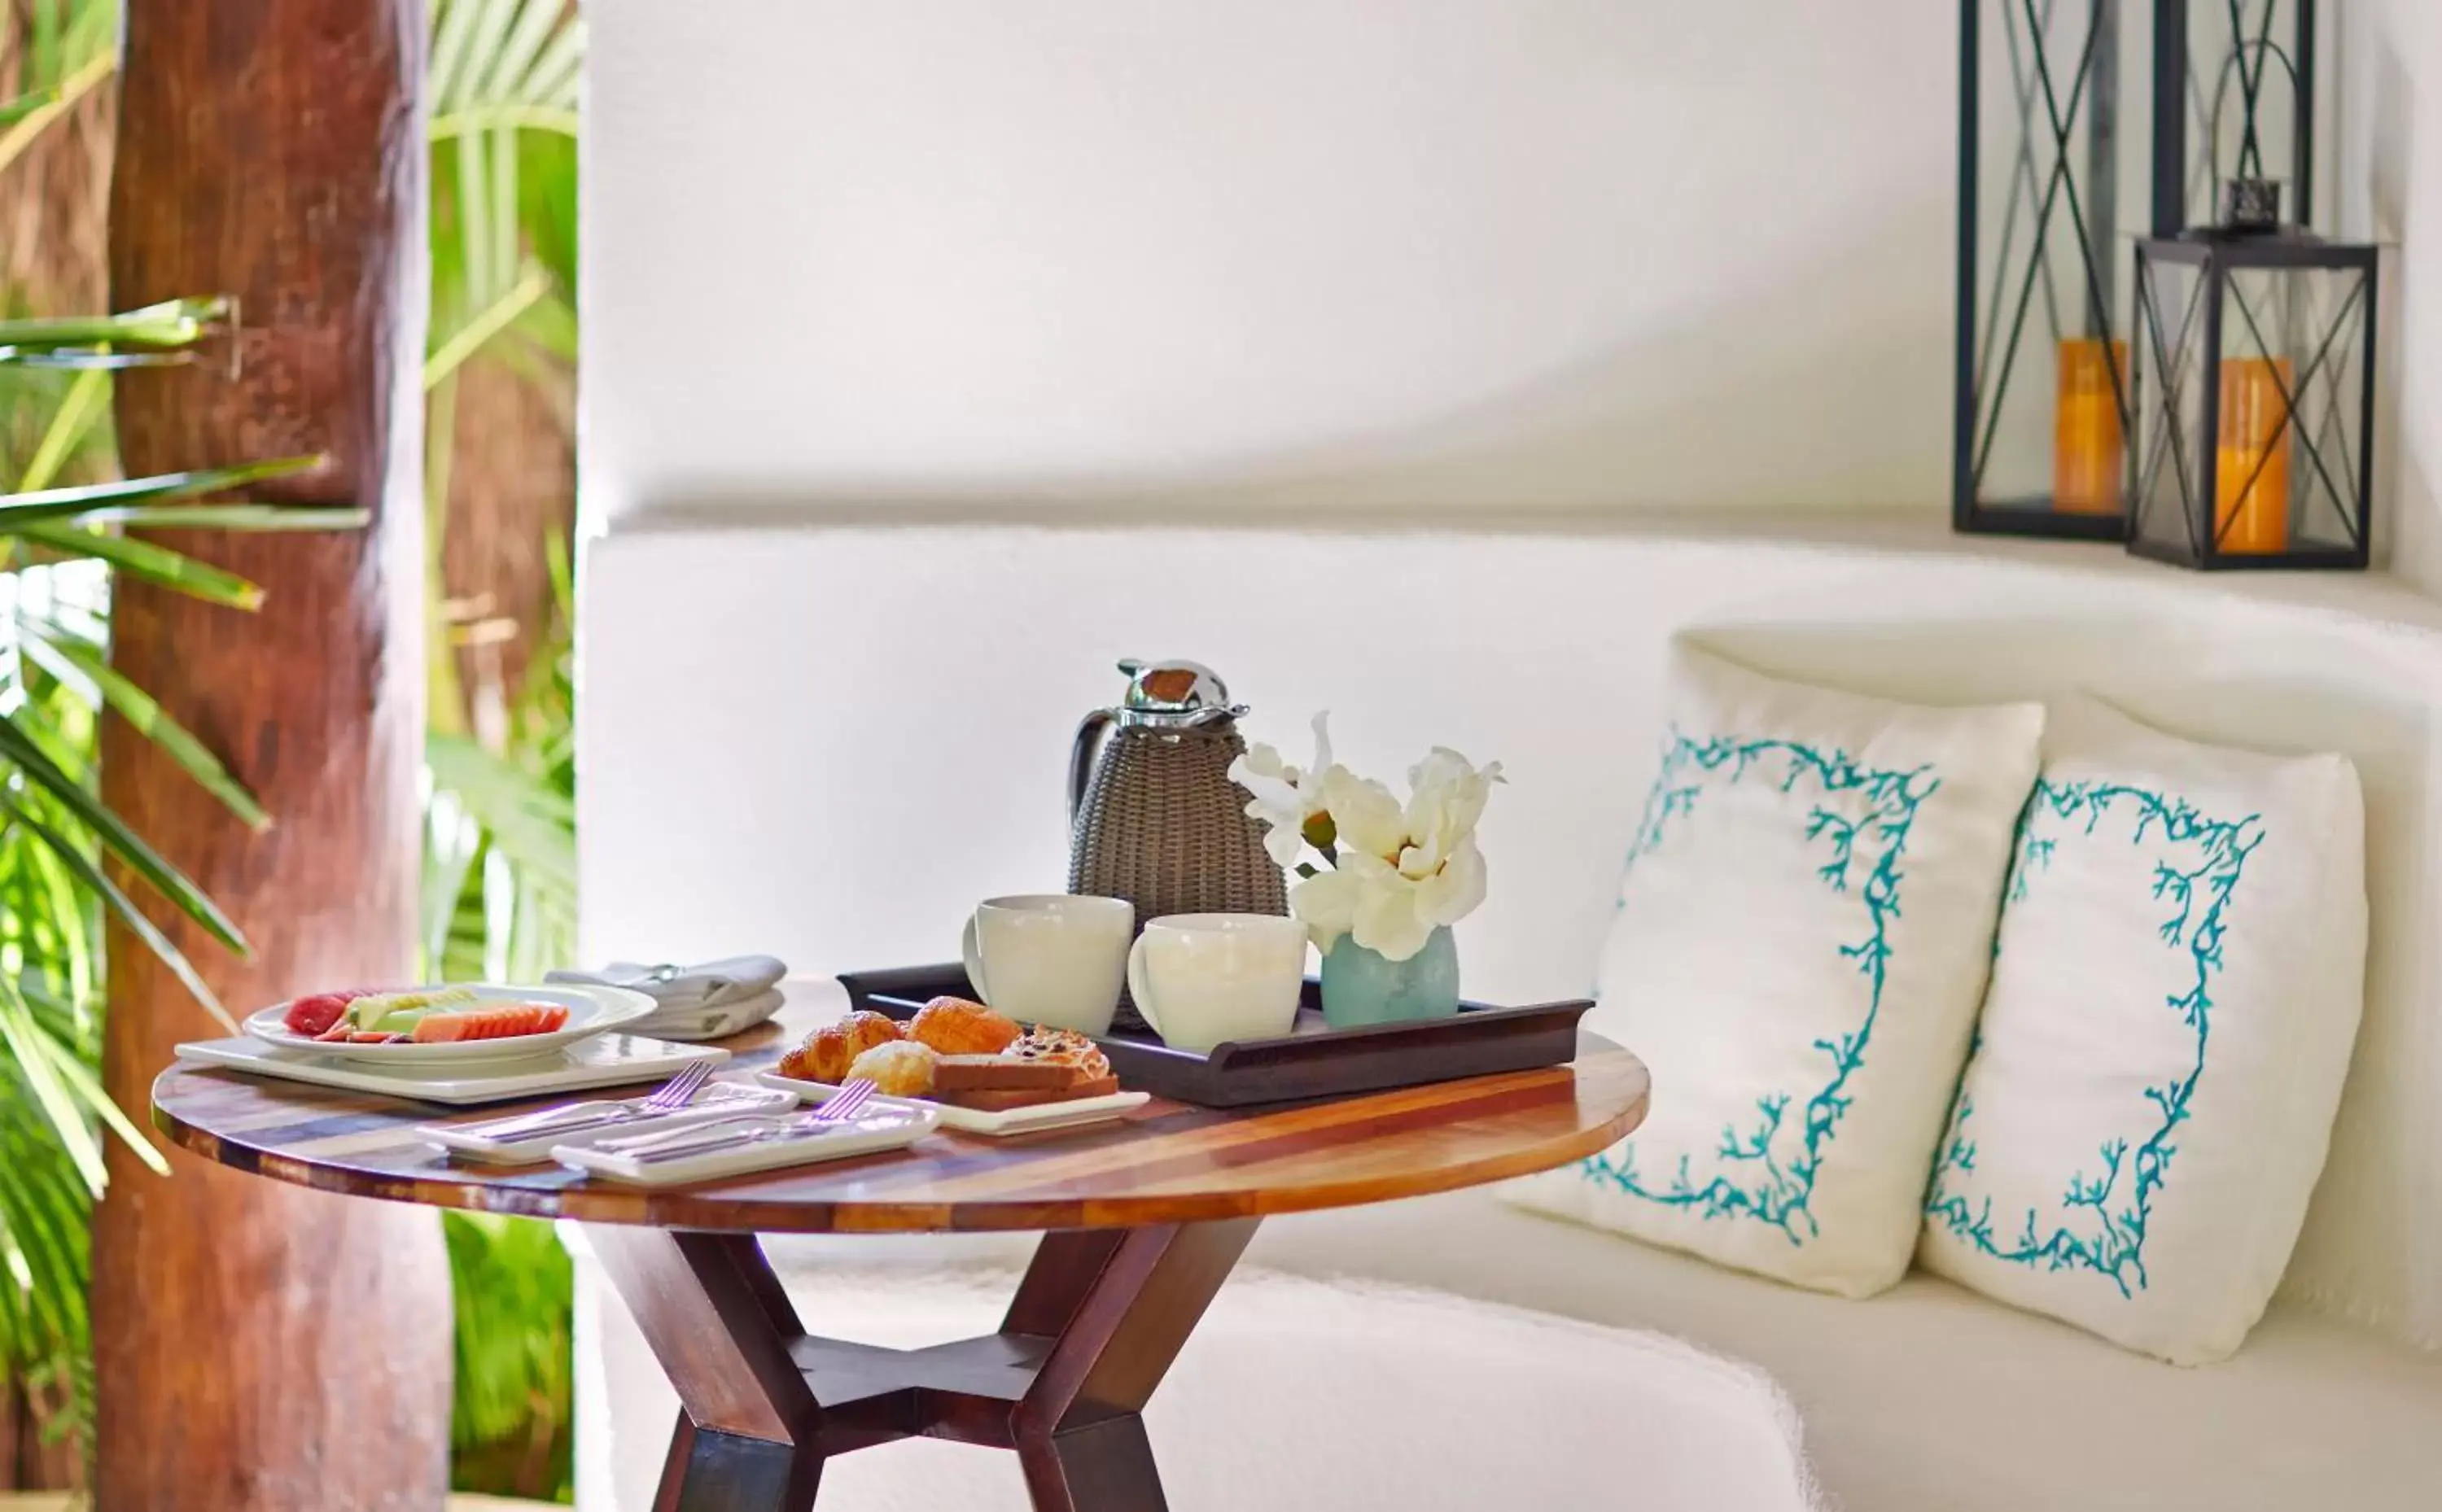 Seating area, Breakfast in Viceroy Riviera Maya, a Luxury Villa Resort